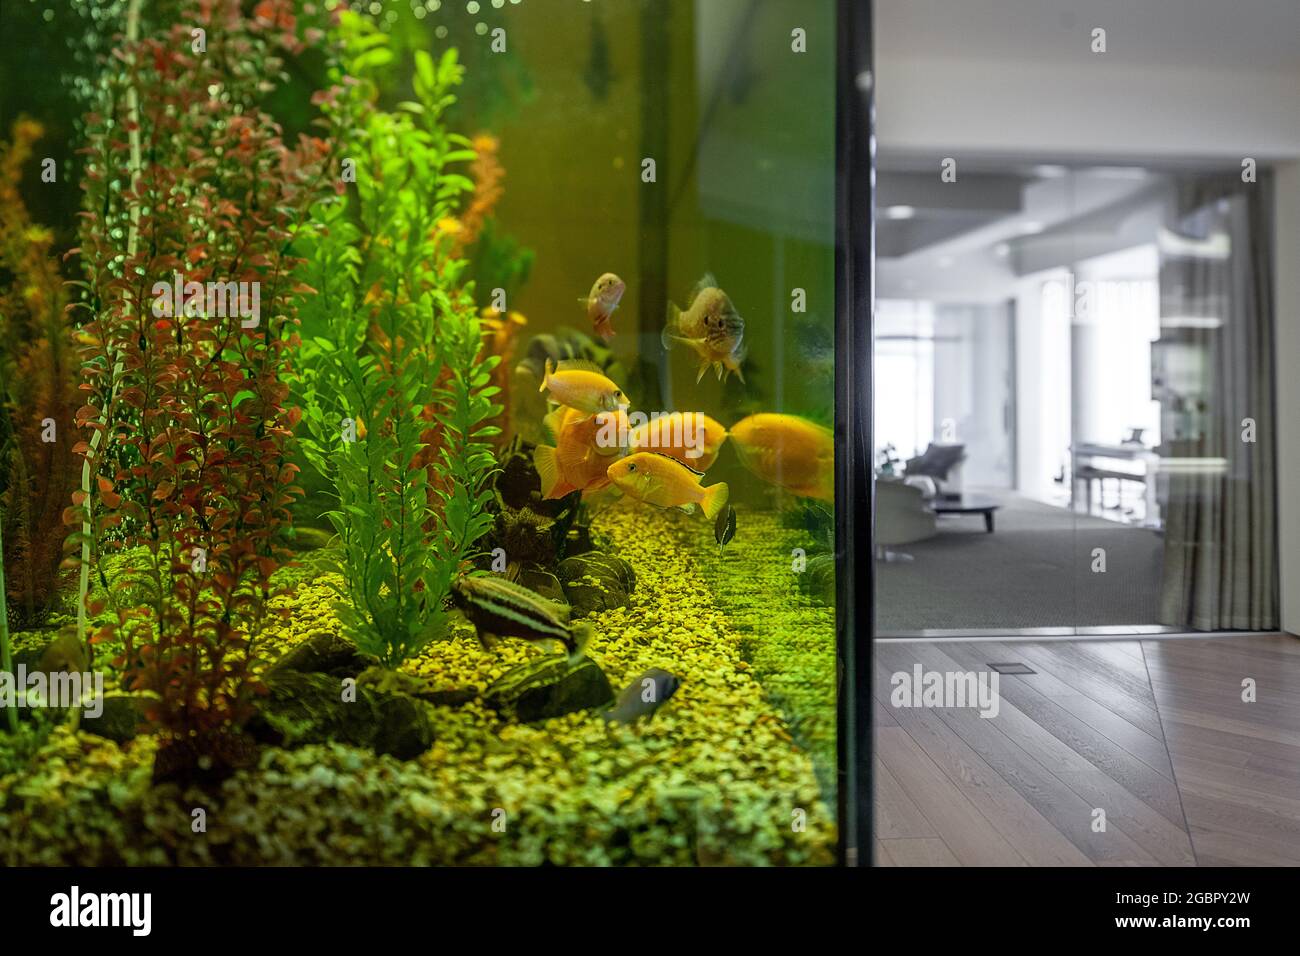 Large home aquarium with cichlids in stylish interior Stock Photo